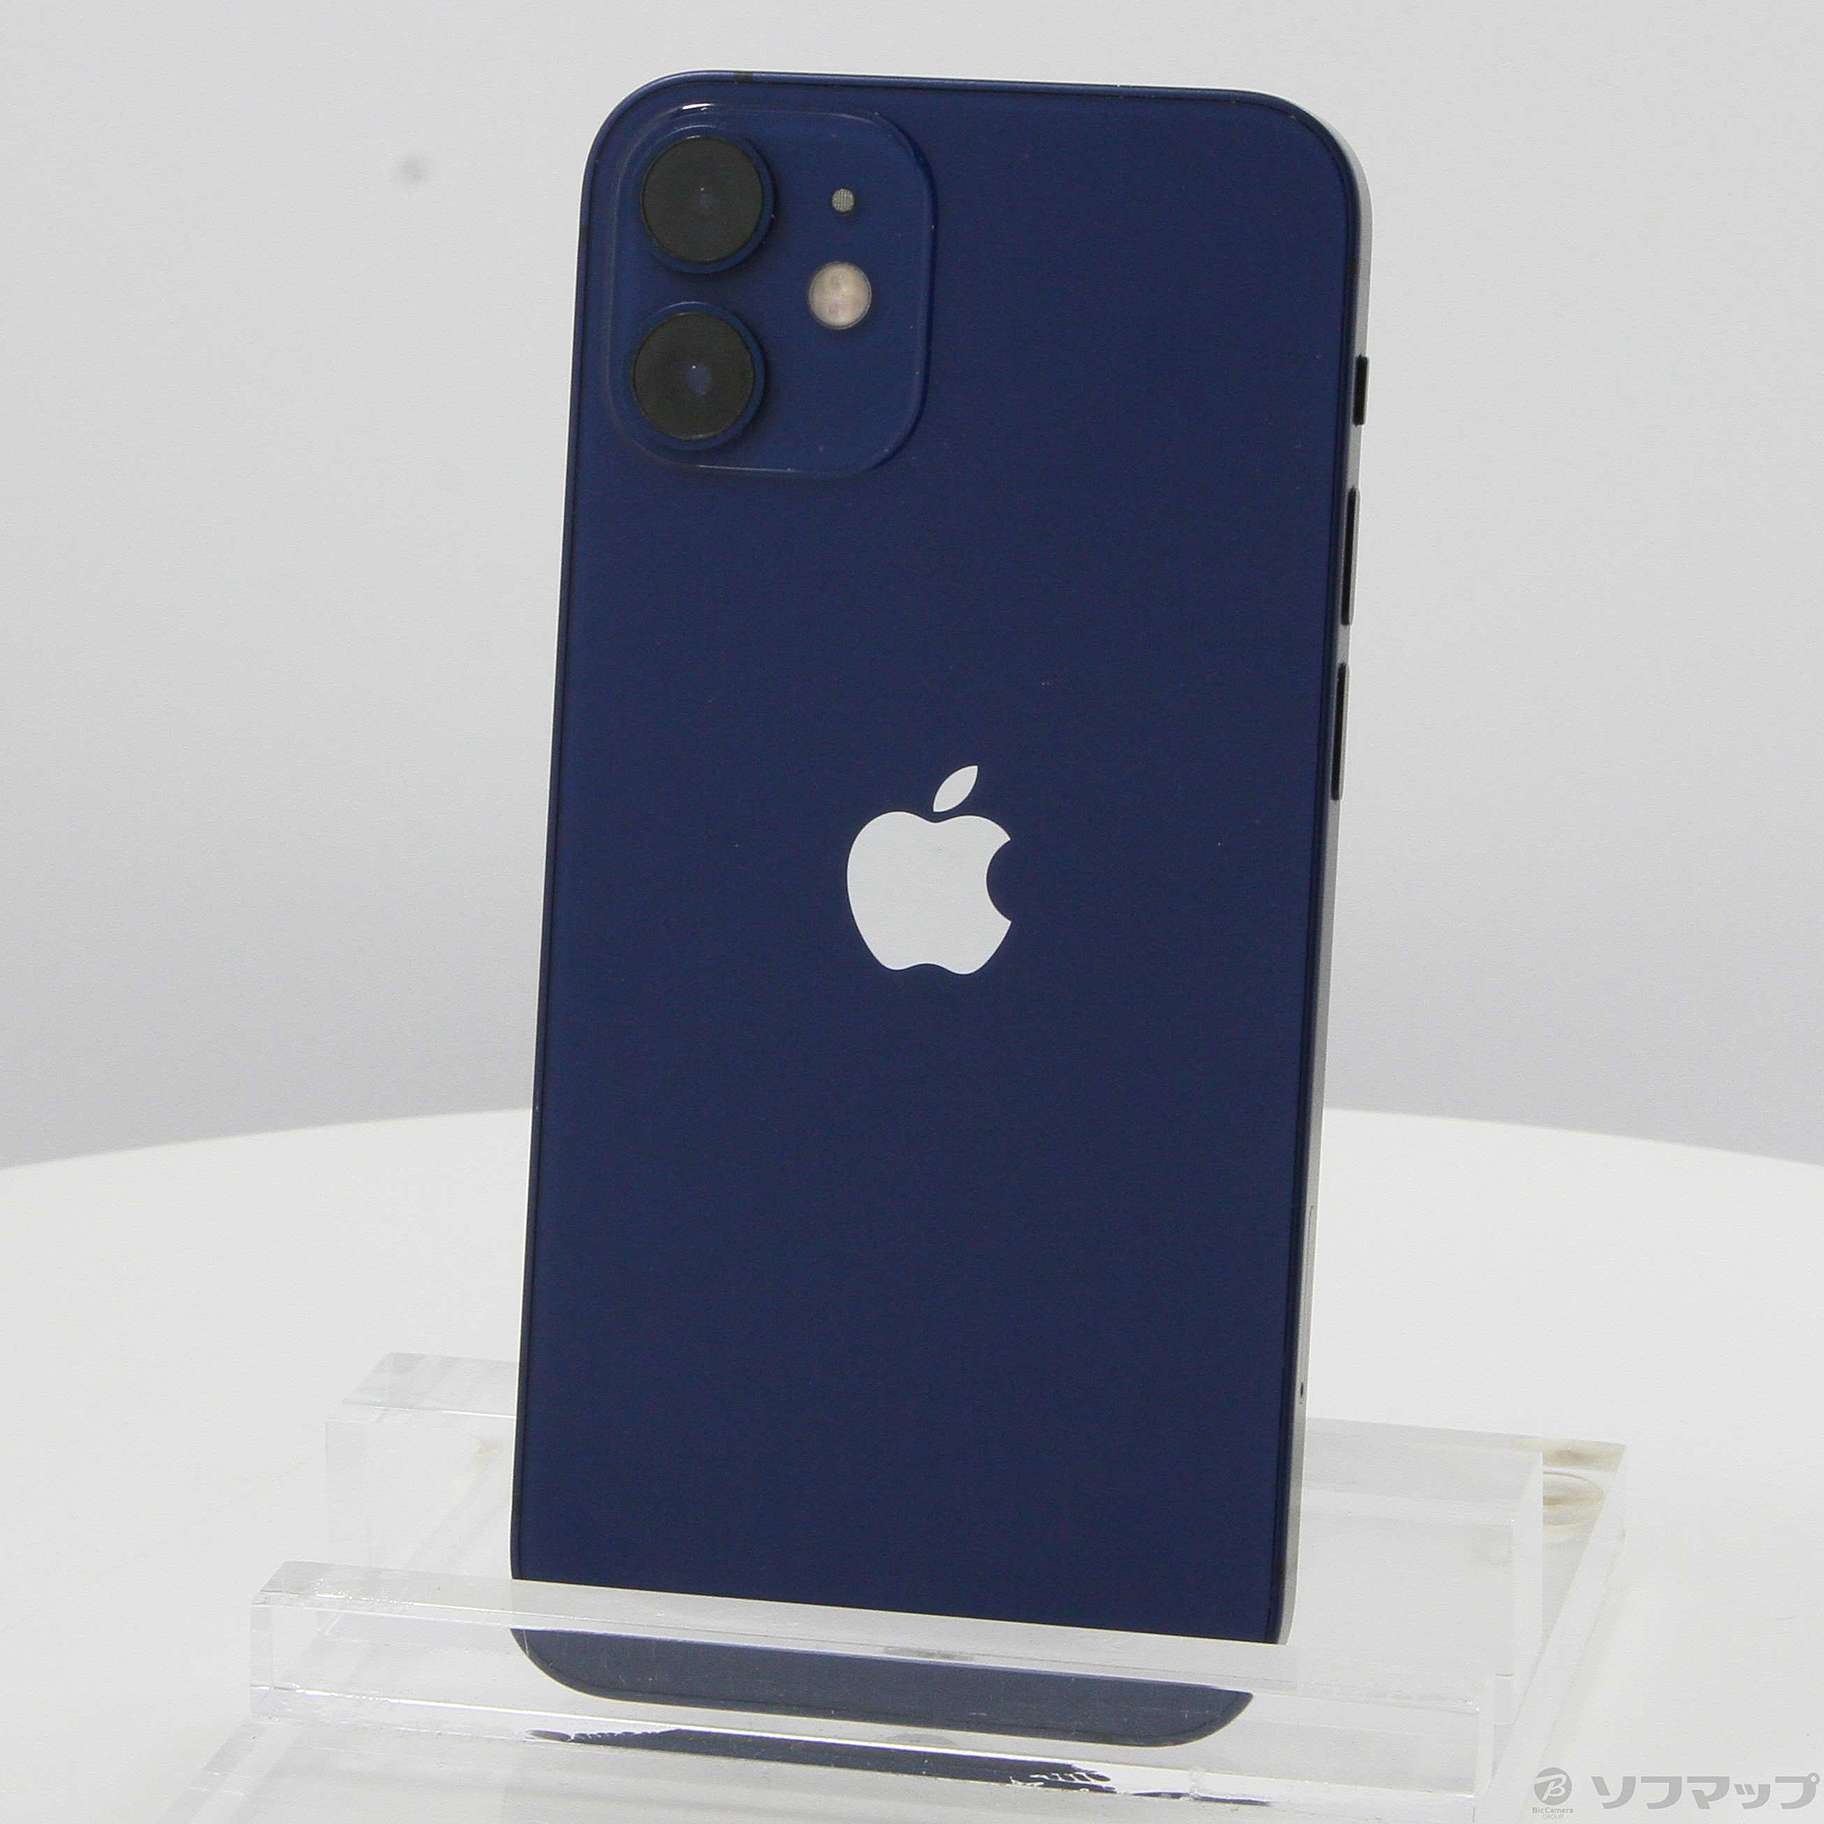 【新品未開封】iPhone12 mini 64GB ブルー